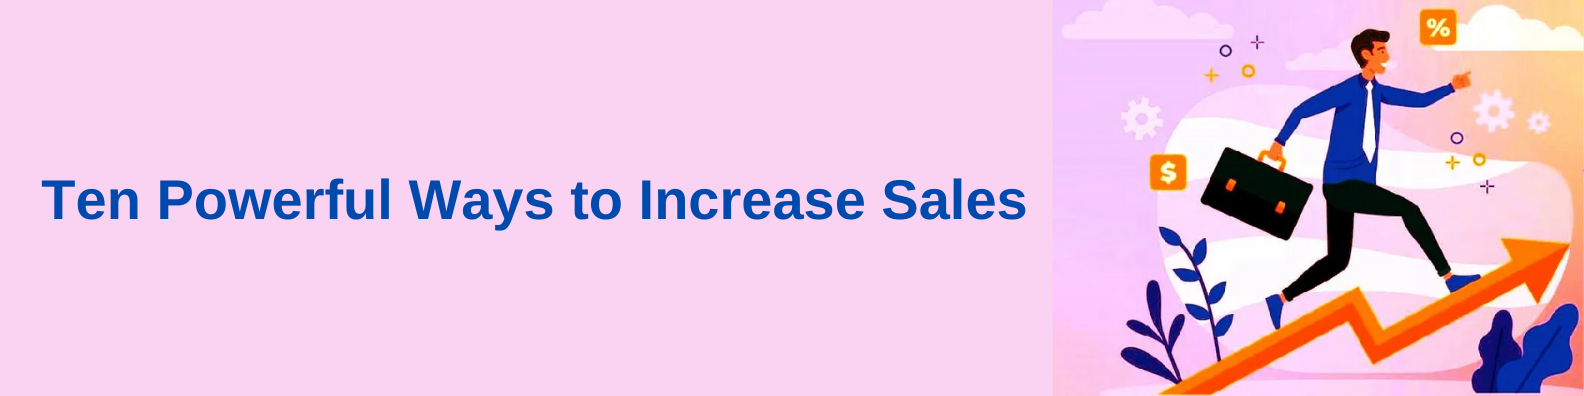 Ten Powerful Ways to Increase Sales